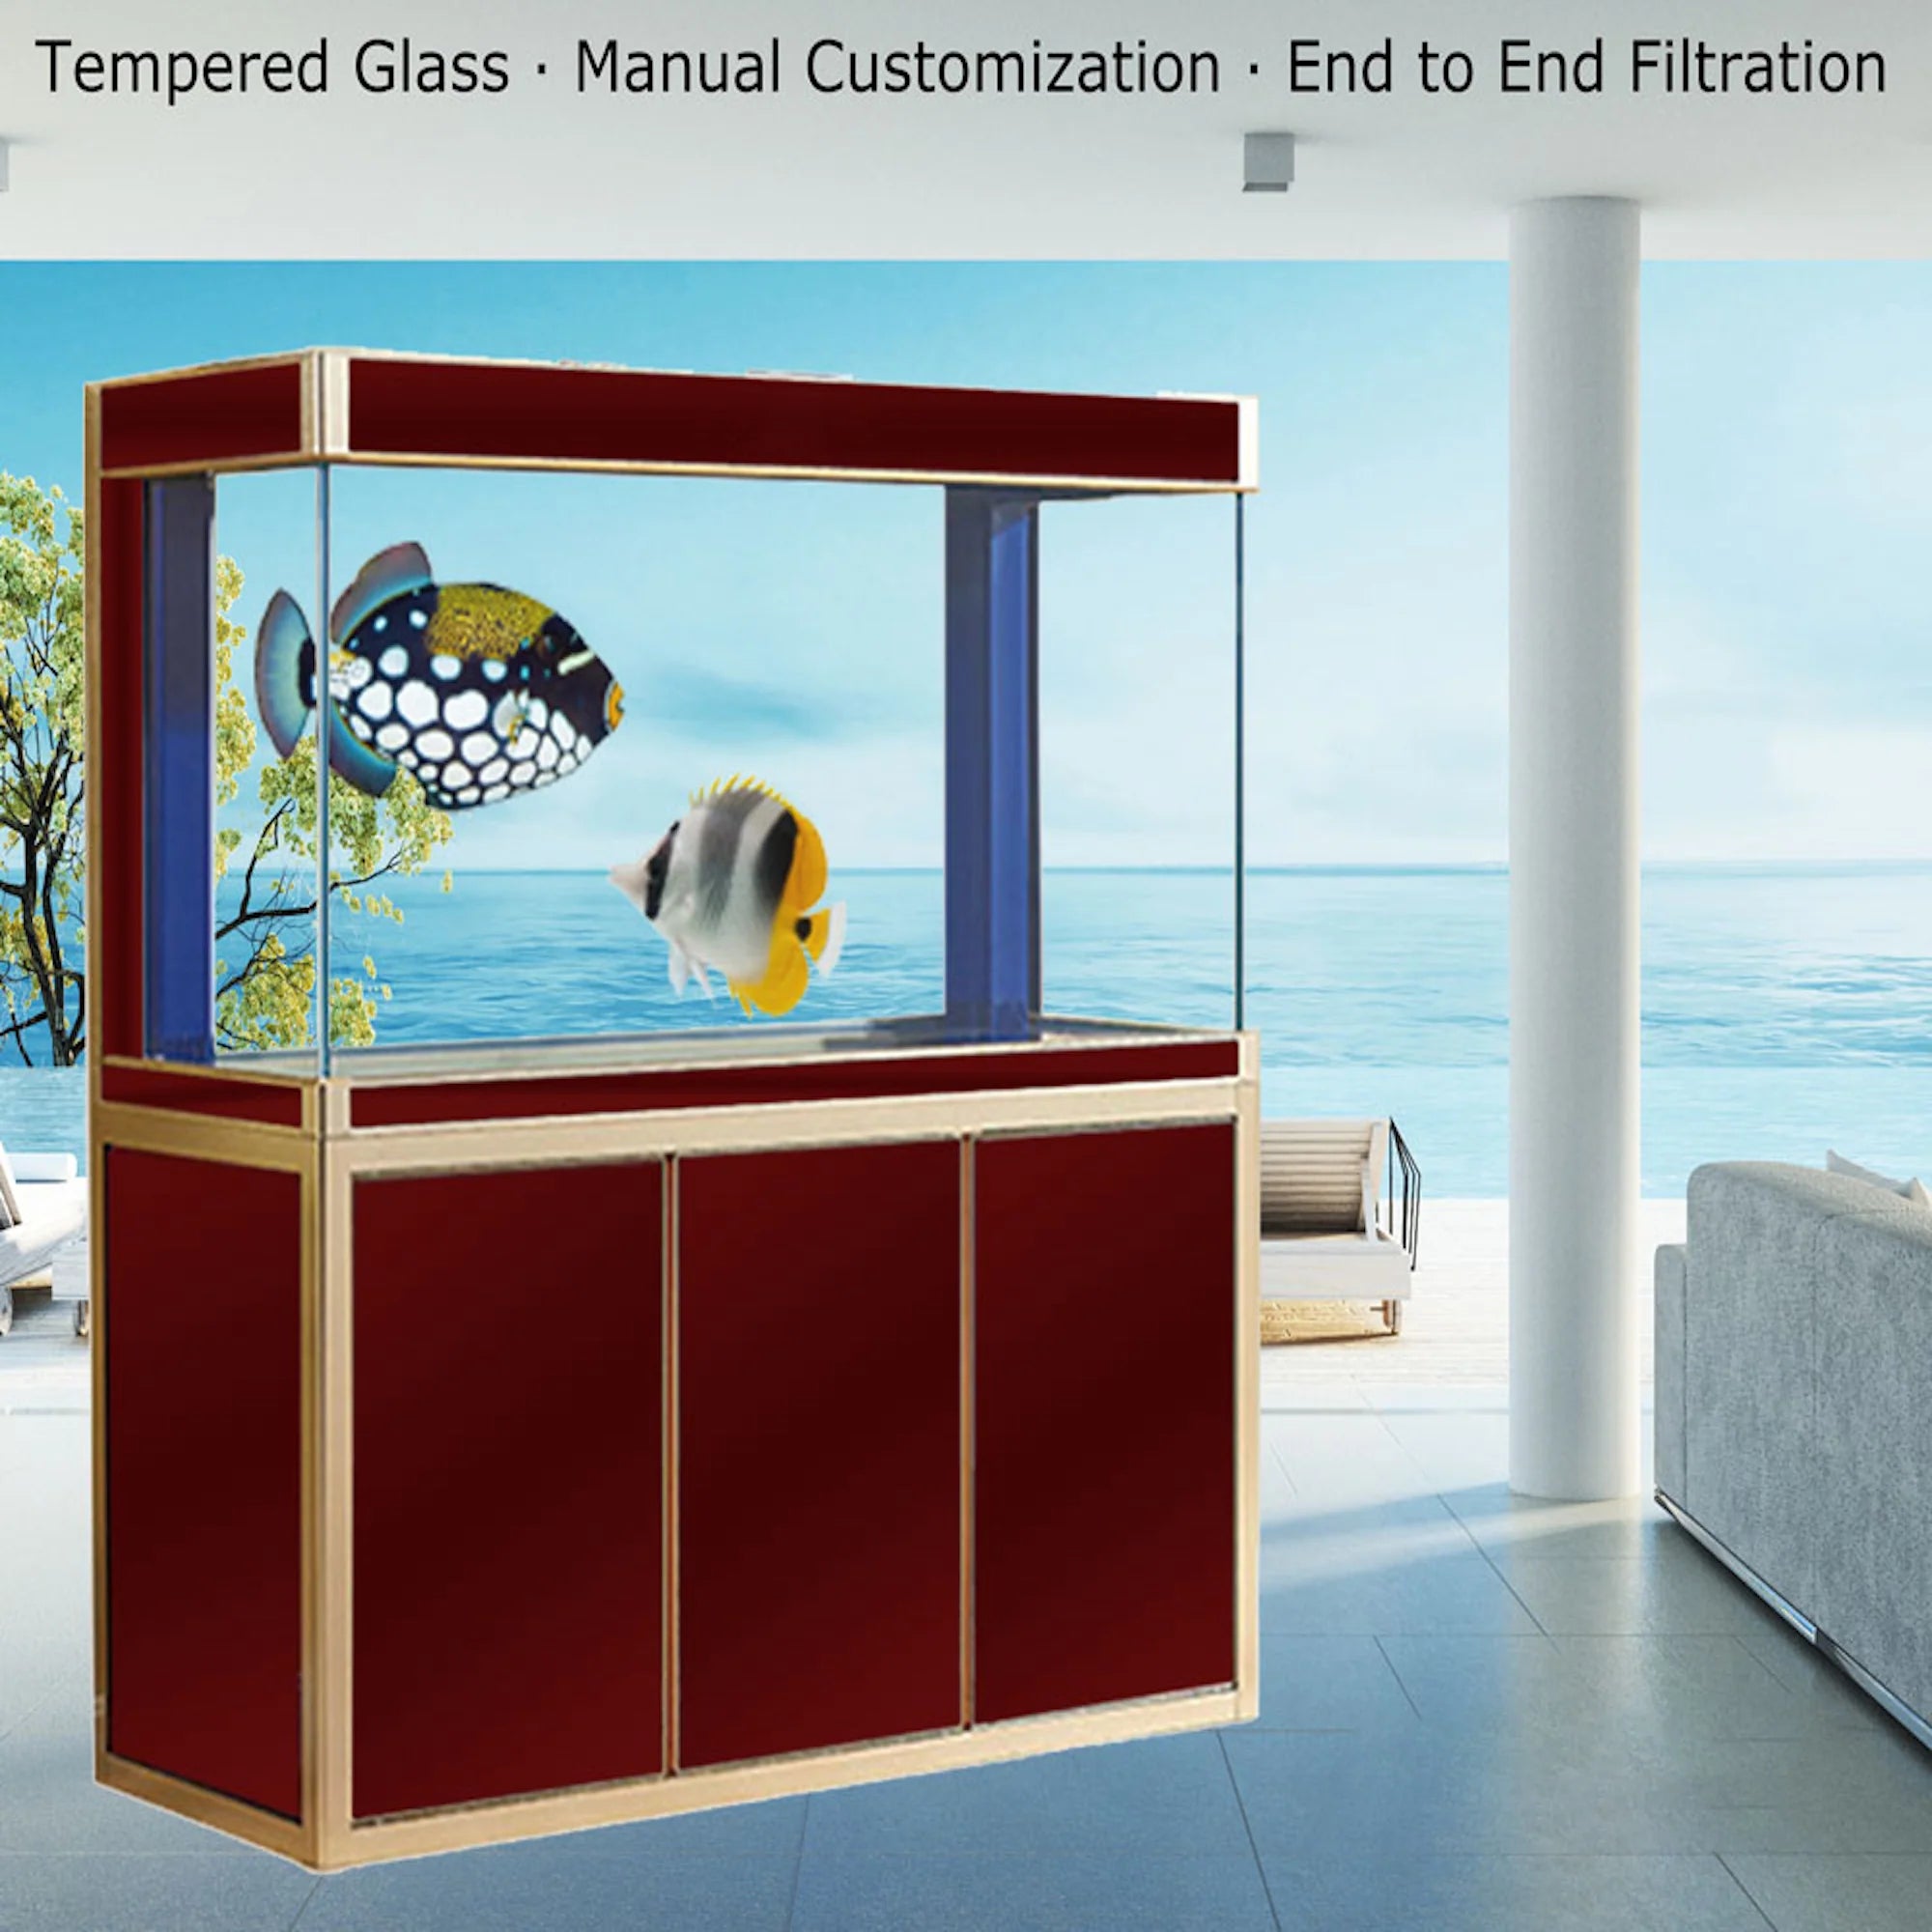 Aqua Dream 135 Gallon Tempered Glass Aquarium Red and Gold AD-1260-RD - Serenity Provision